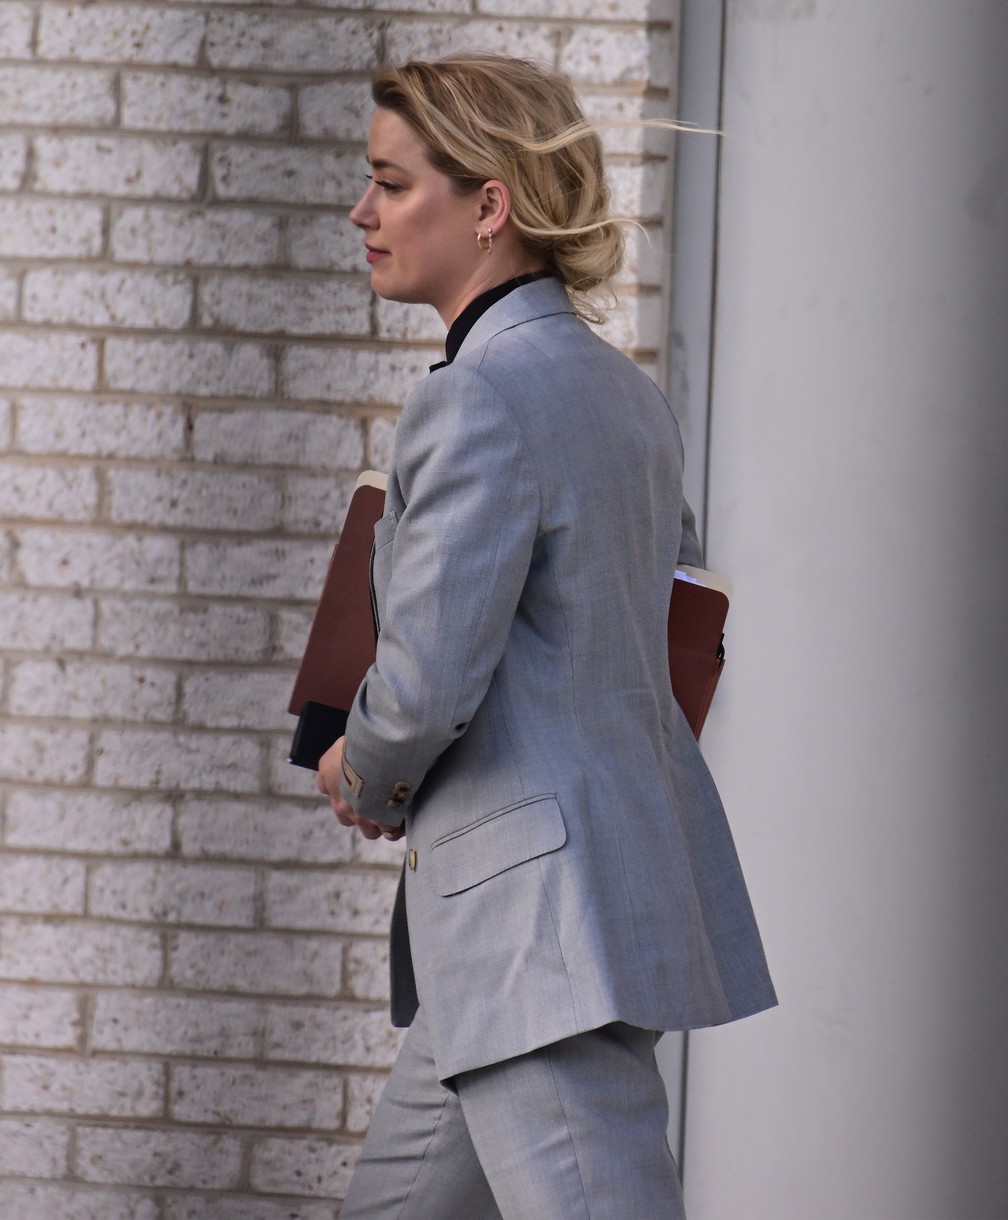 Amber Heard após sair do tribunal — Foto: Getty Images